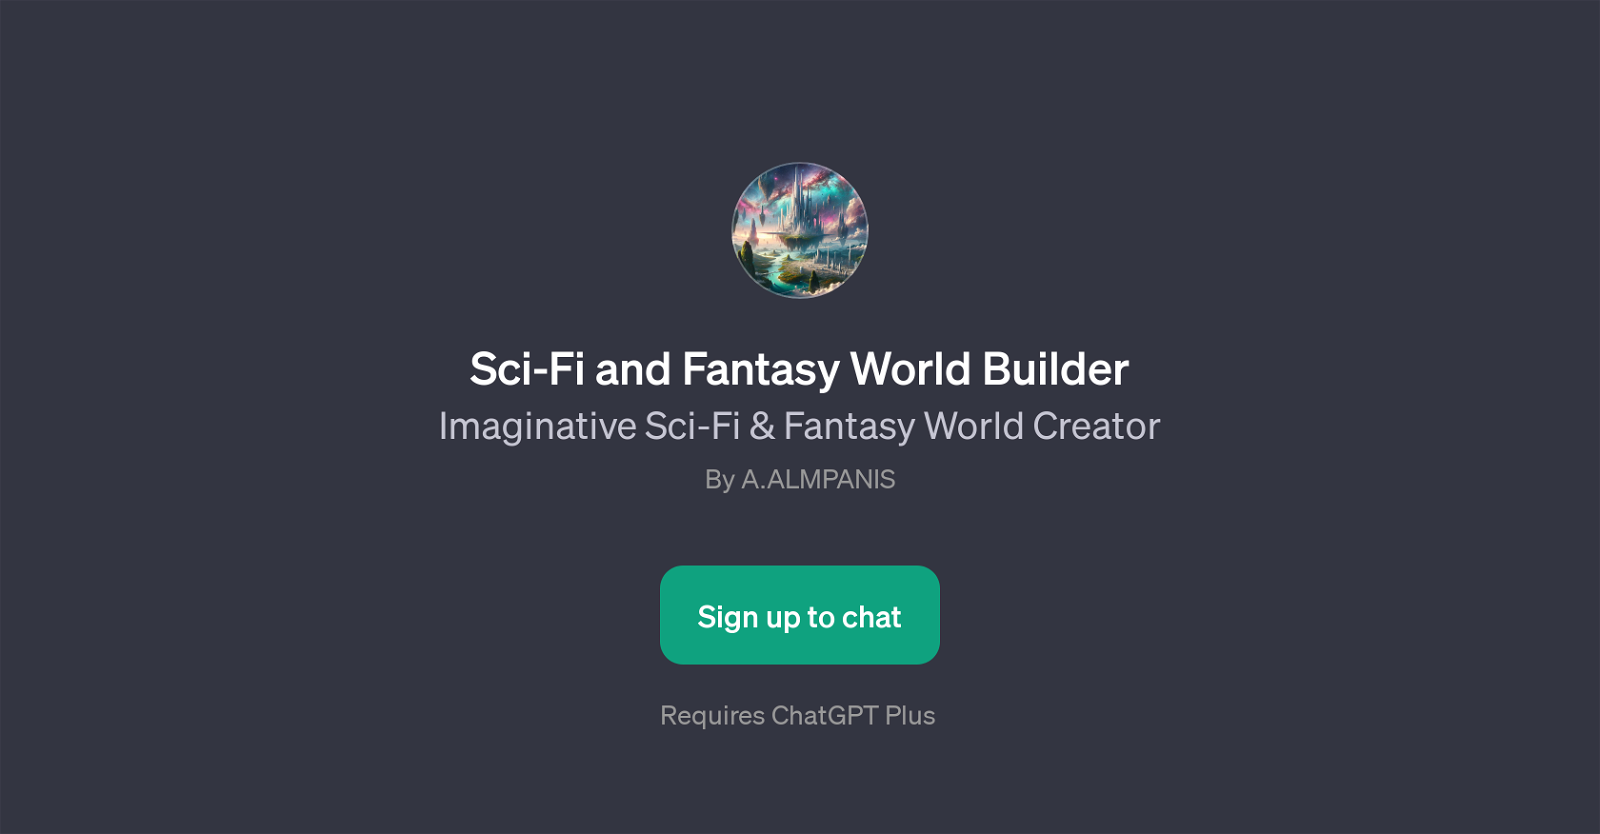 Sci-Fi and Fantasy World Builder website